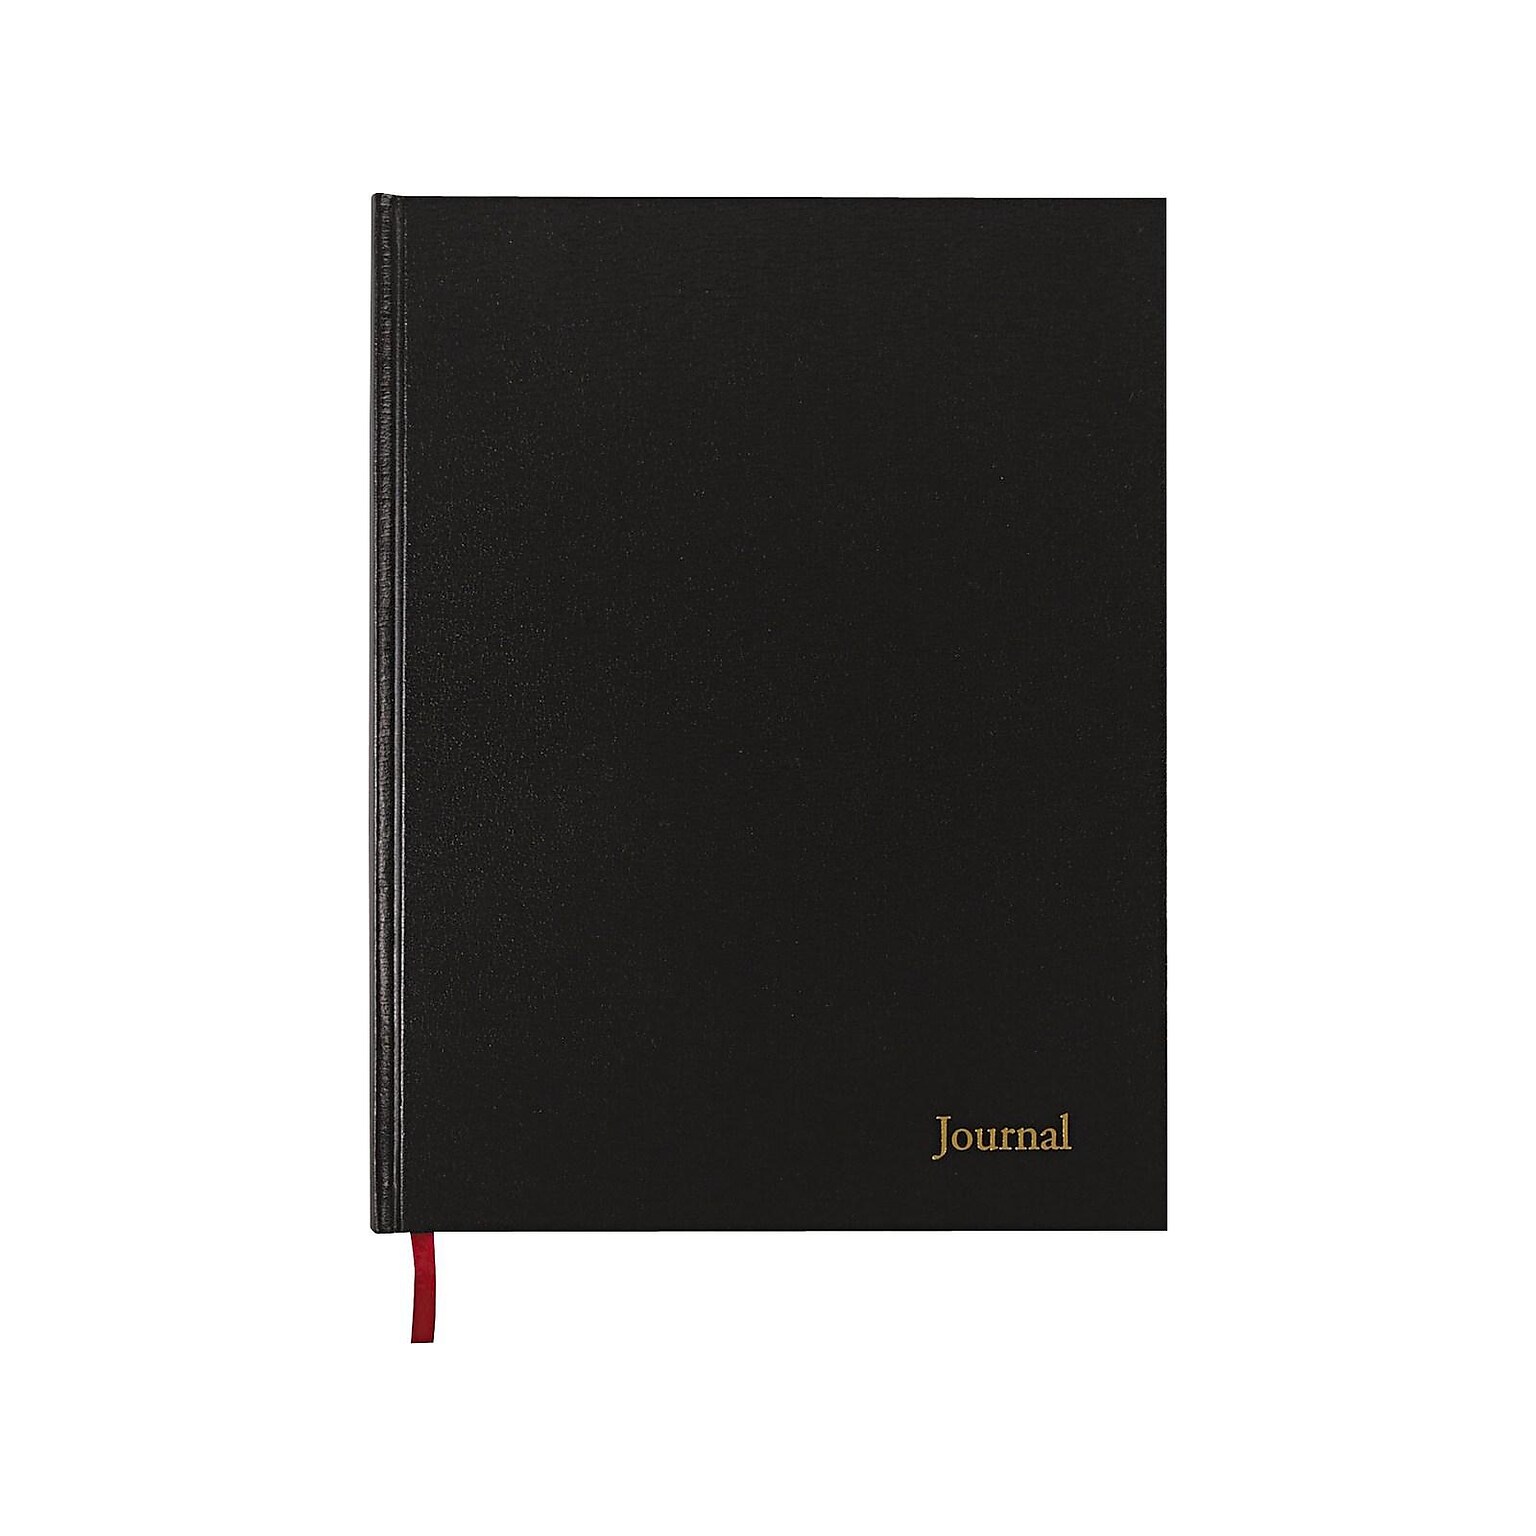 TOPS Executive Paper Journal, 8.5W x 11H, Black (J25811)